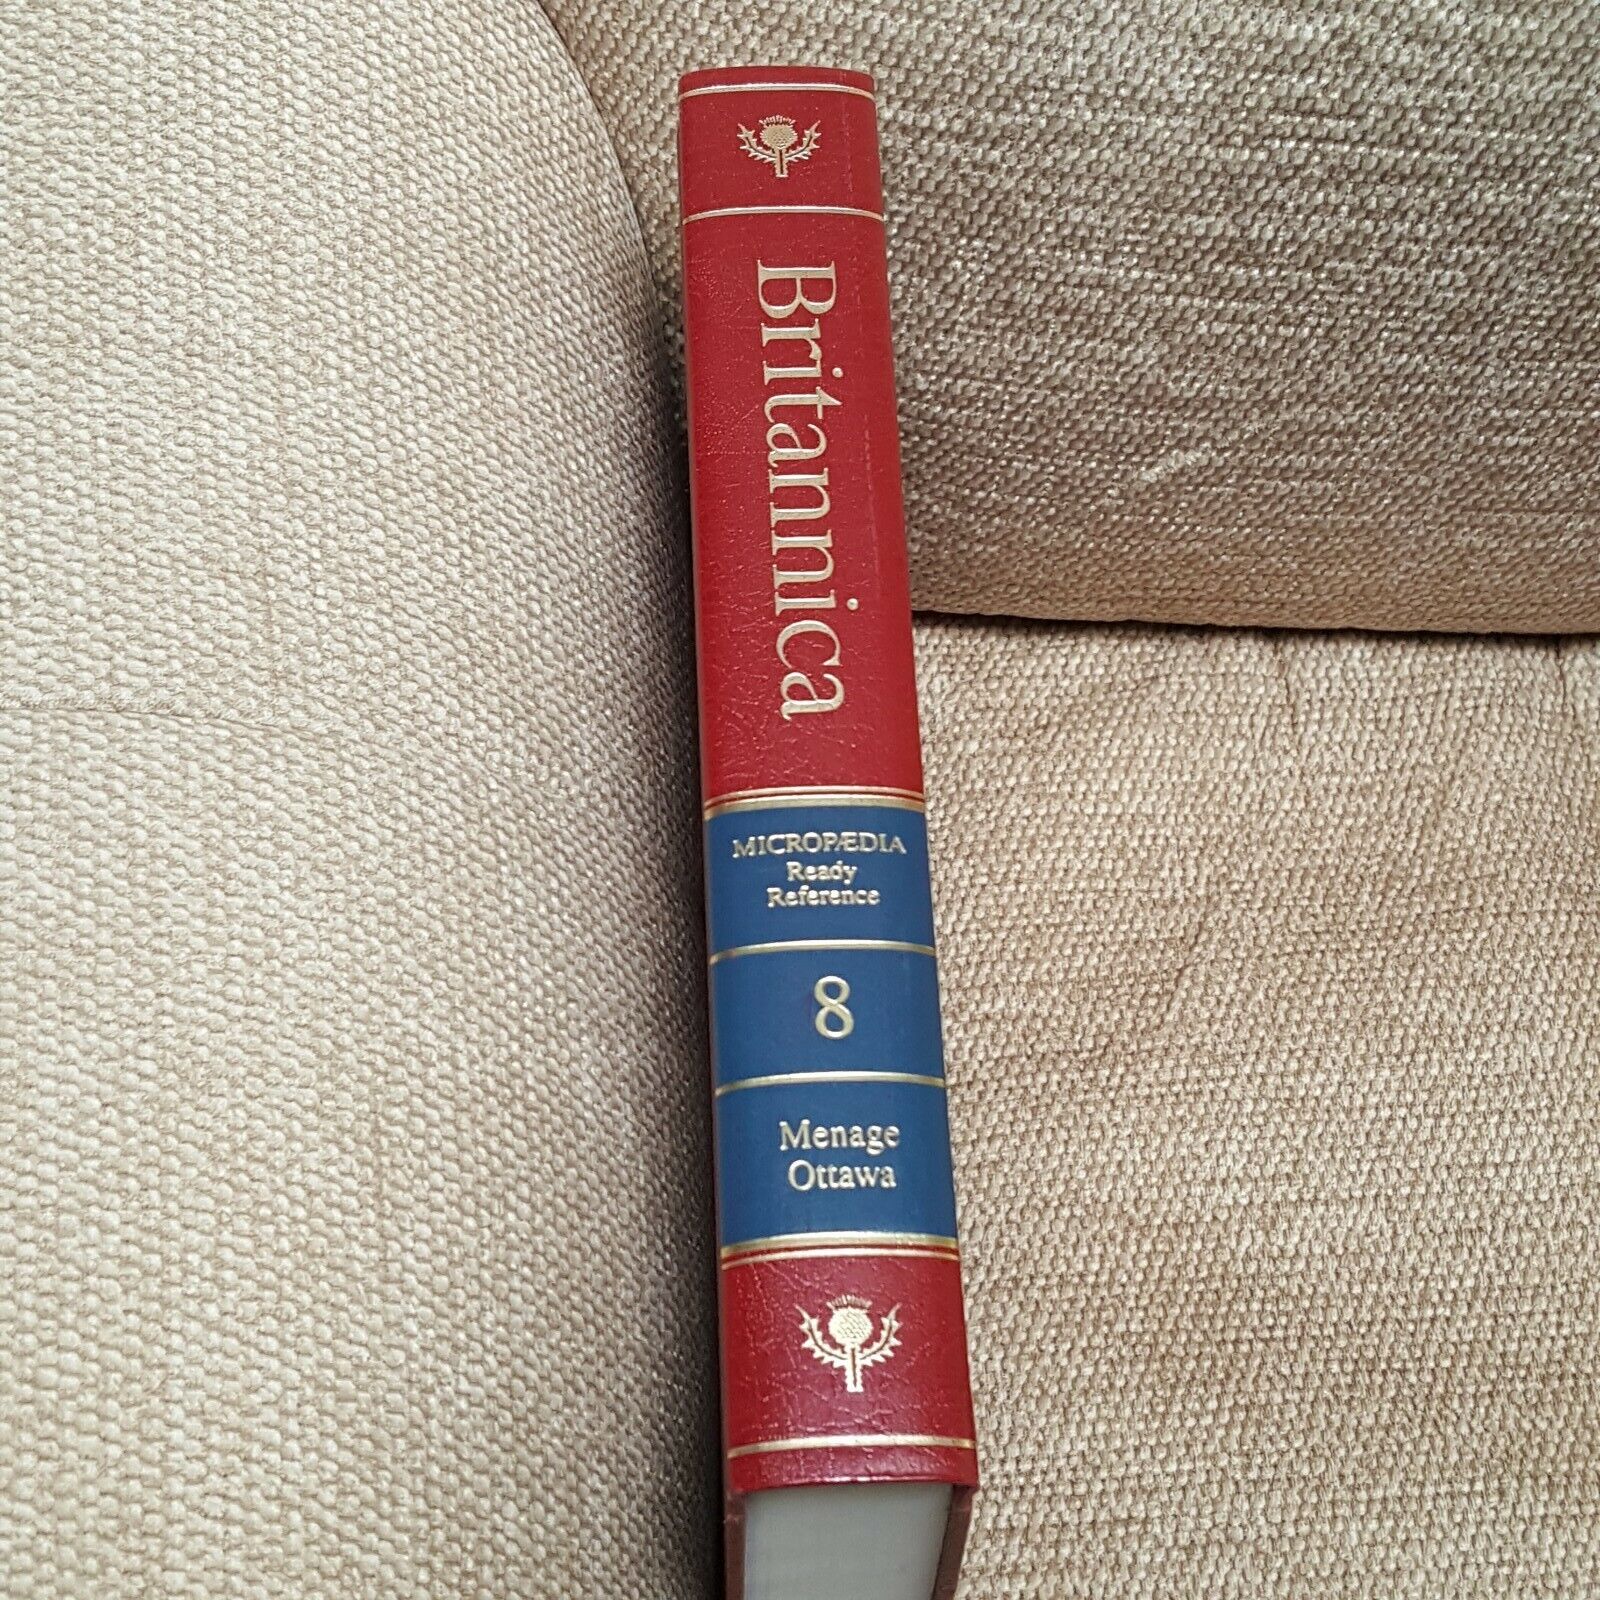 Encyclopedia Britannica Ready Reference Micropedia Vol 8 Menage Ottawa